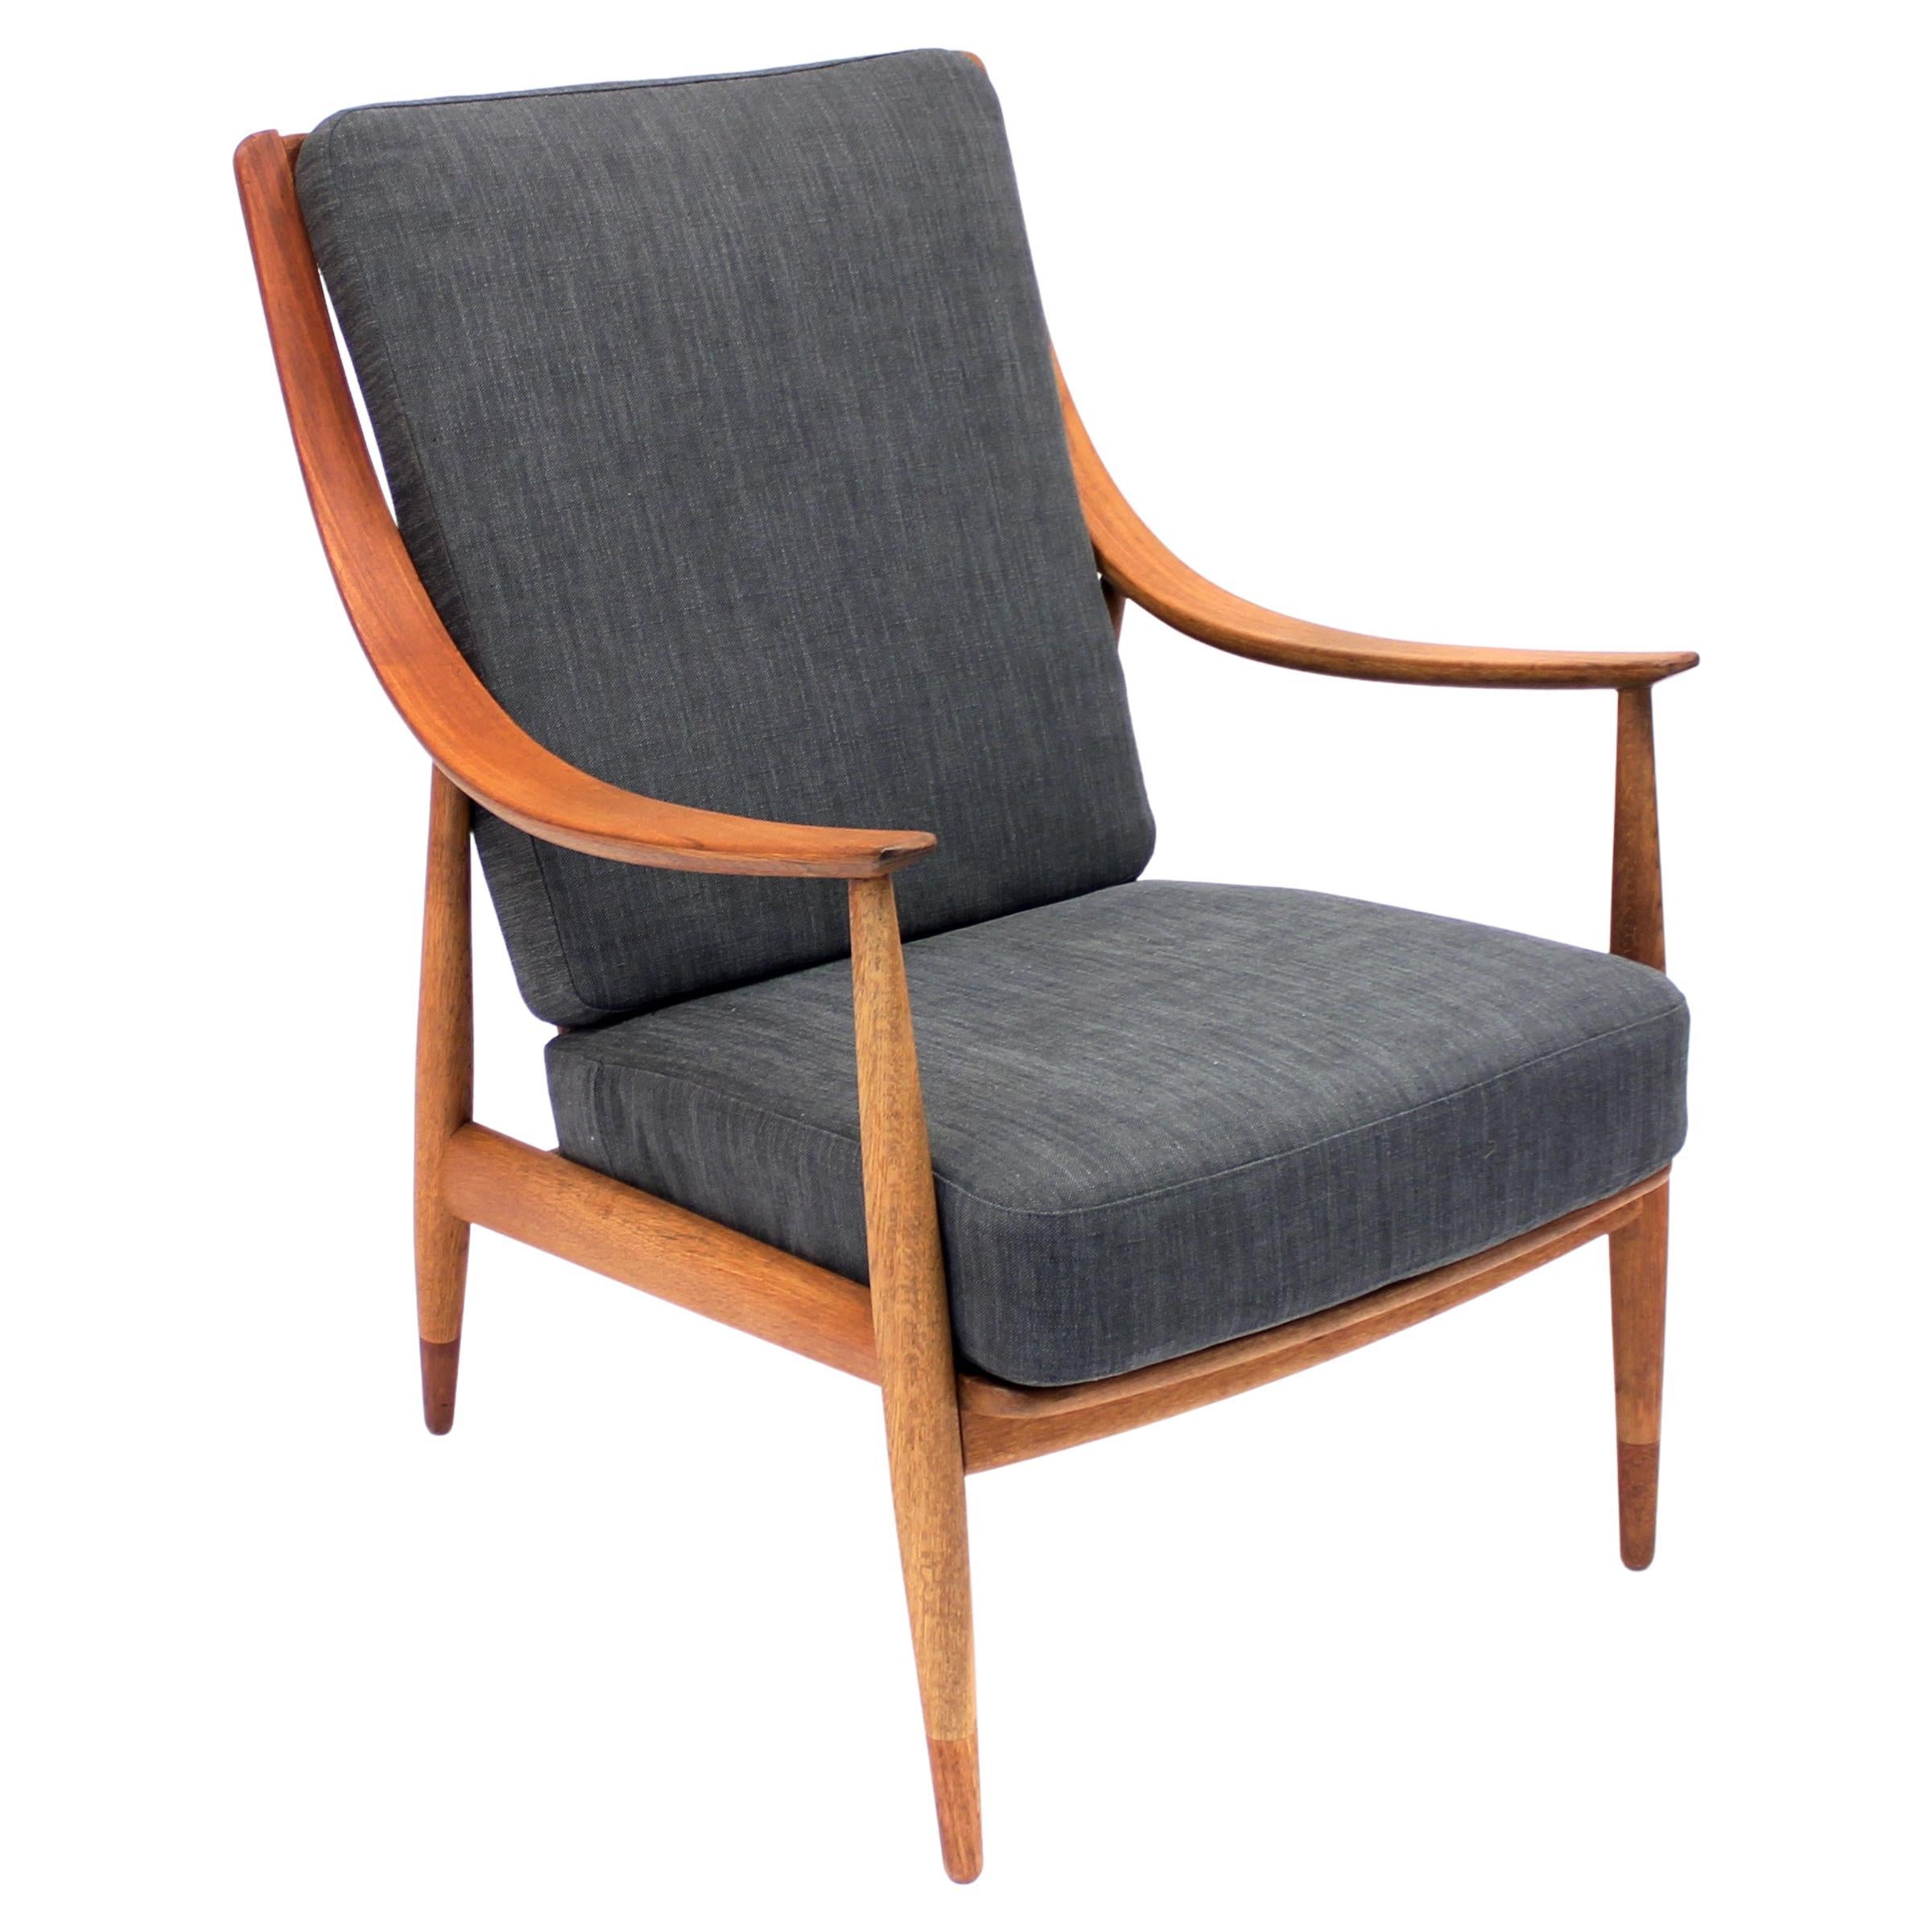 Hvidt & Mølgaard, Teak and Oak Lounge Chair FD 145, France & Daverkosen, 1950s